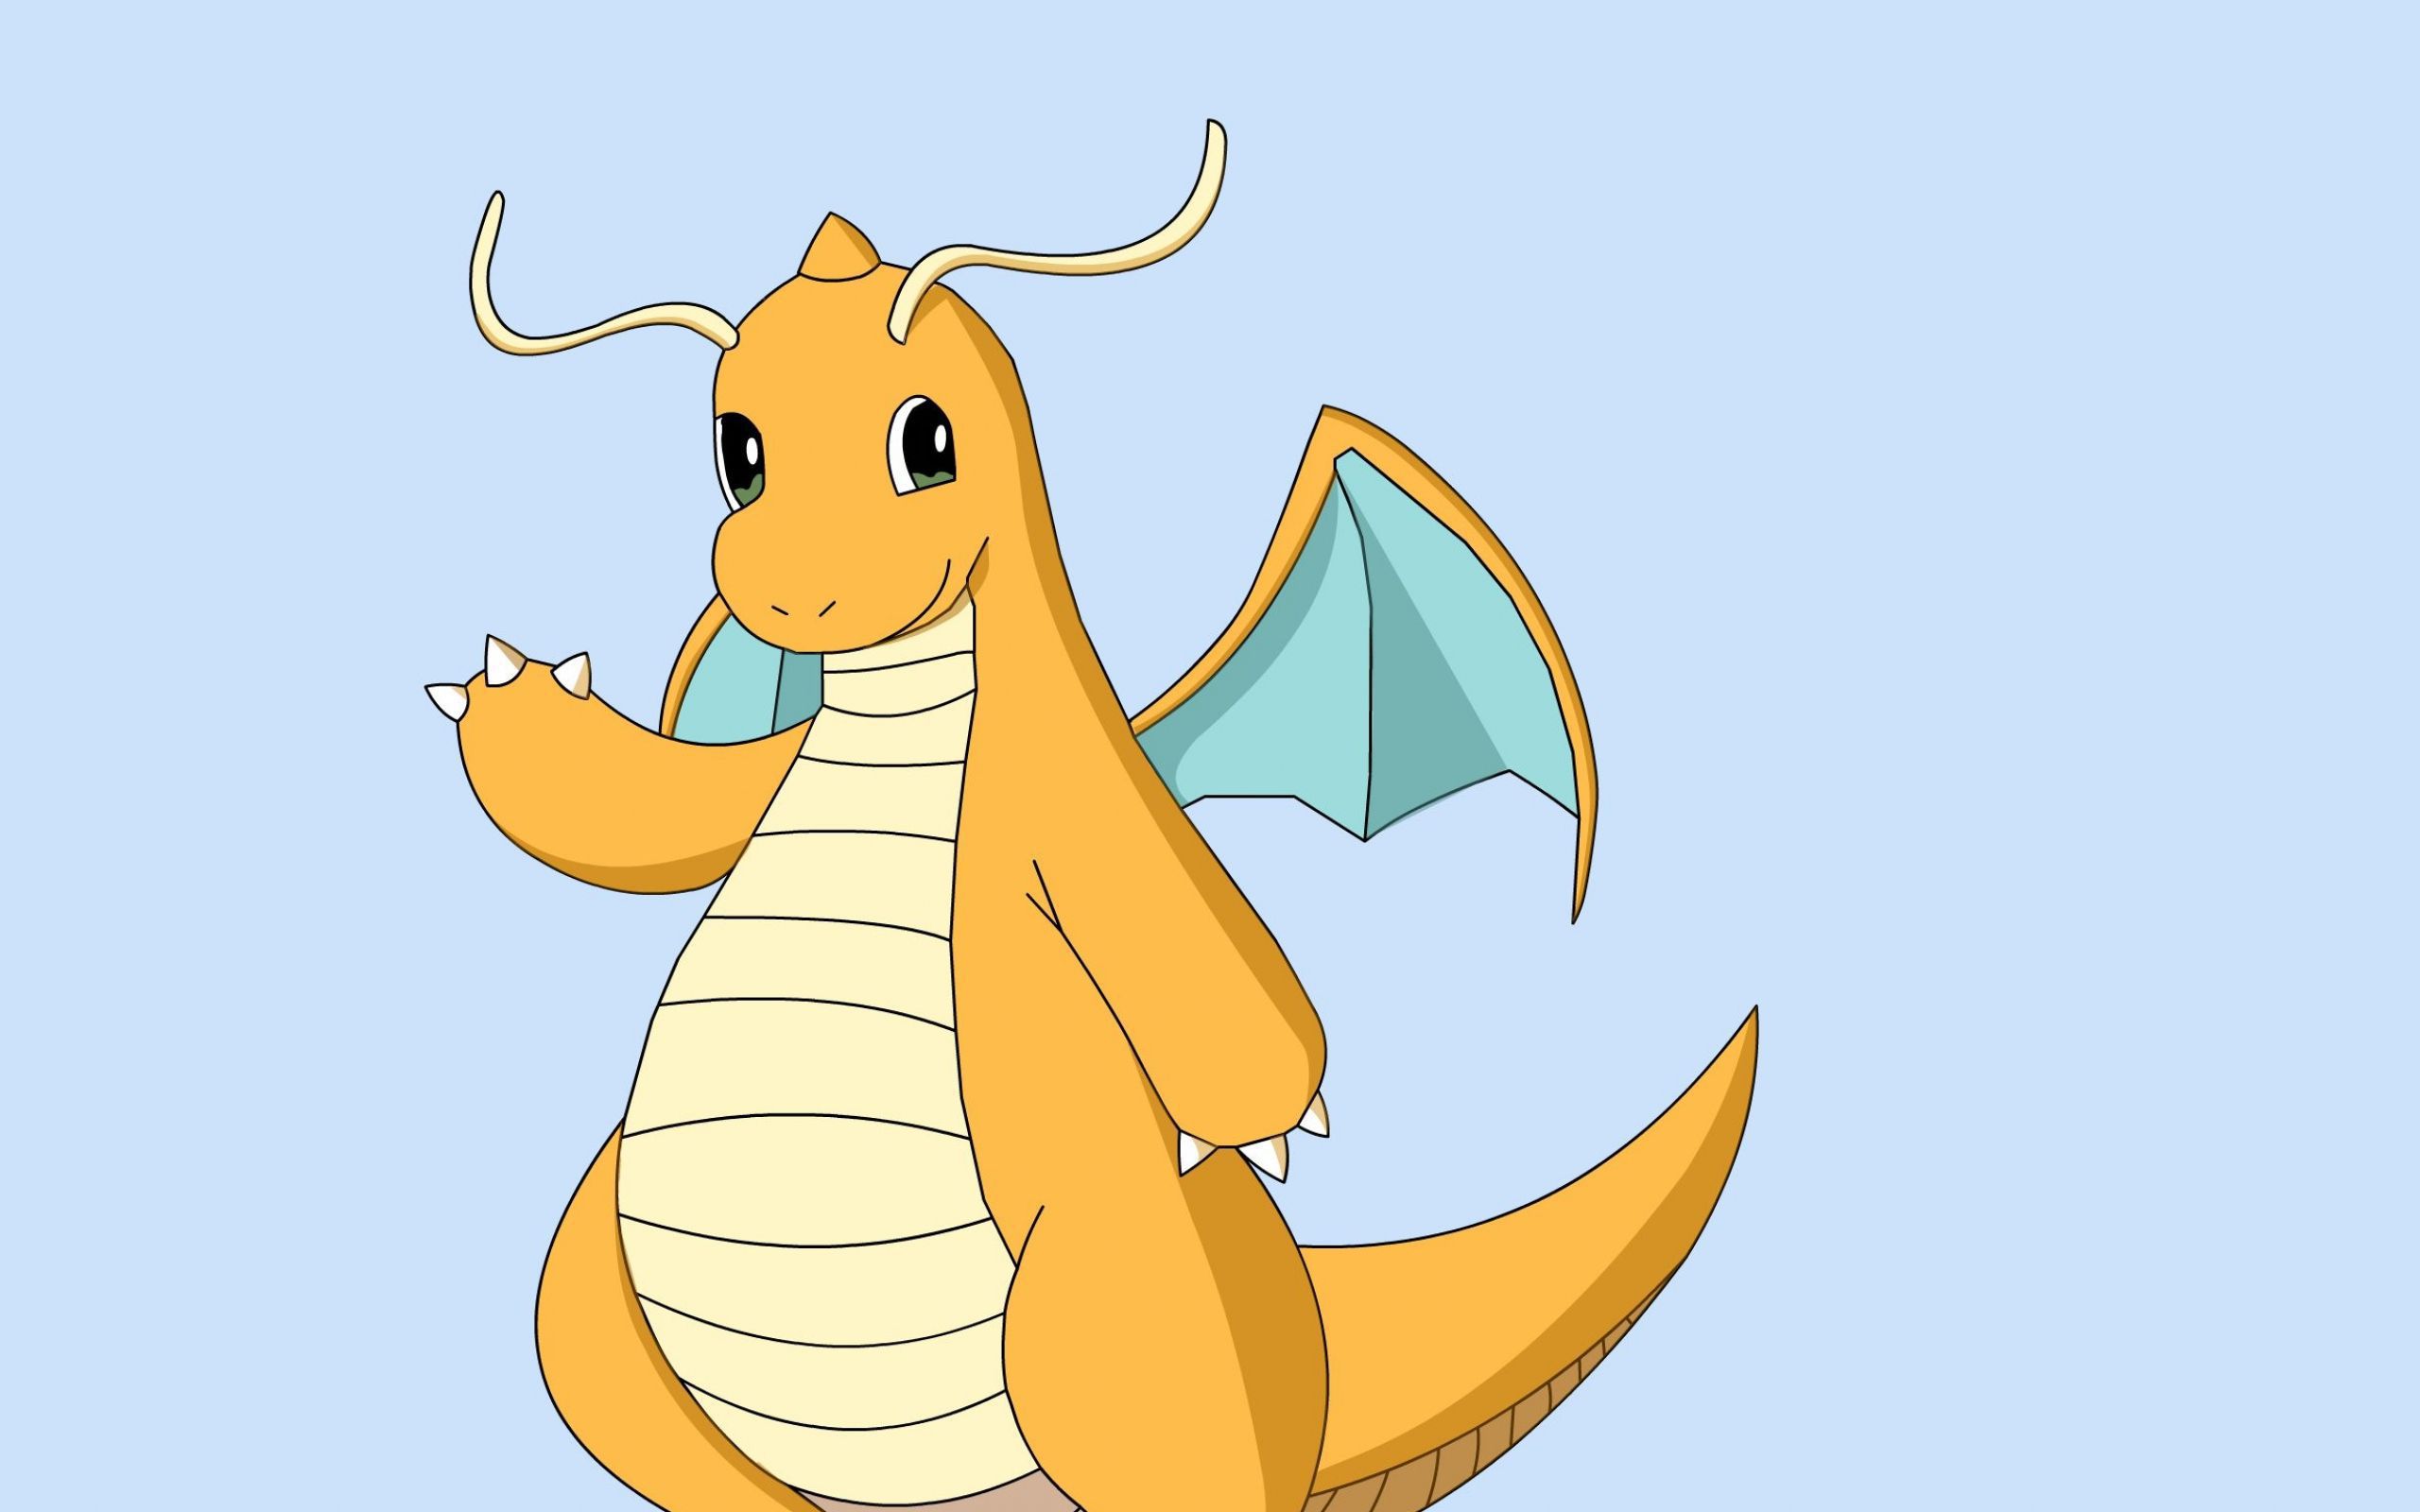 Descarga gratis la imagen Pokémon, Animado, Dragonite (Pokémon) en el escritorio de tu PC